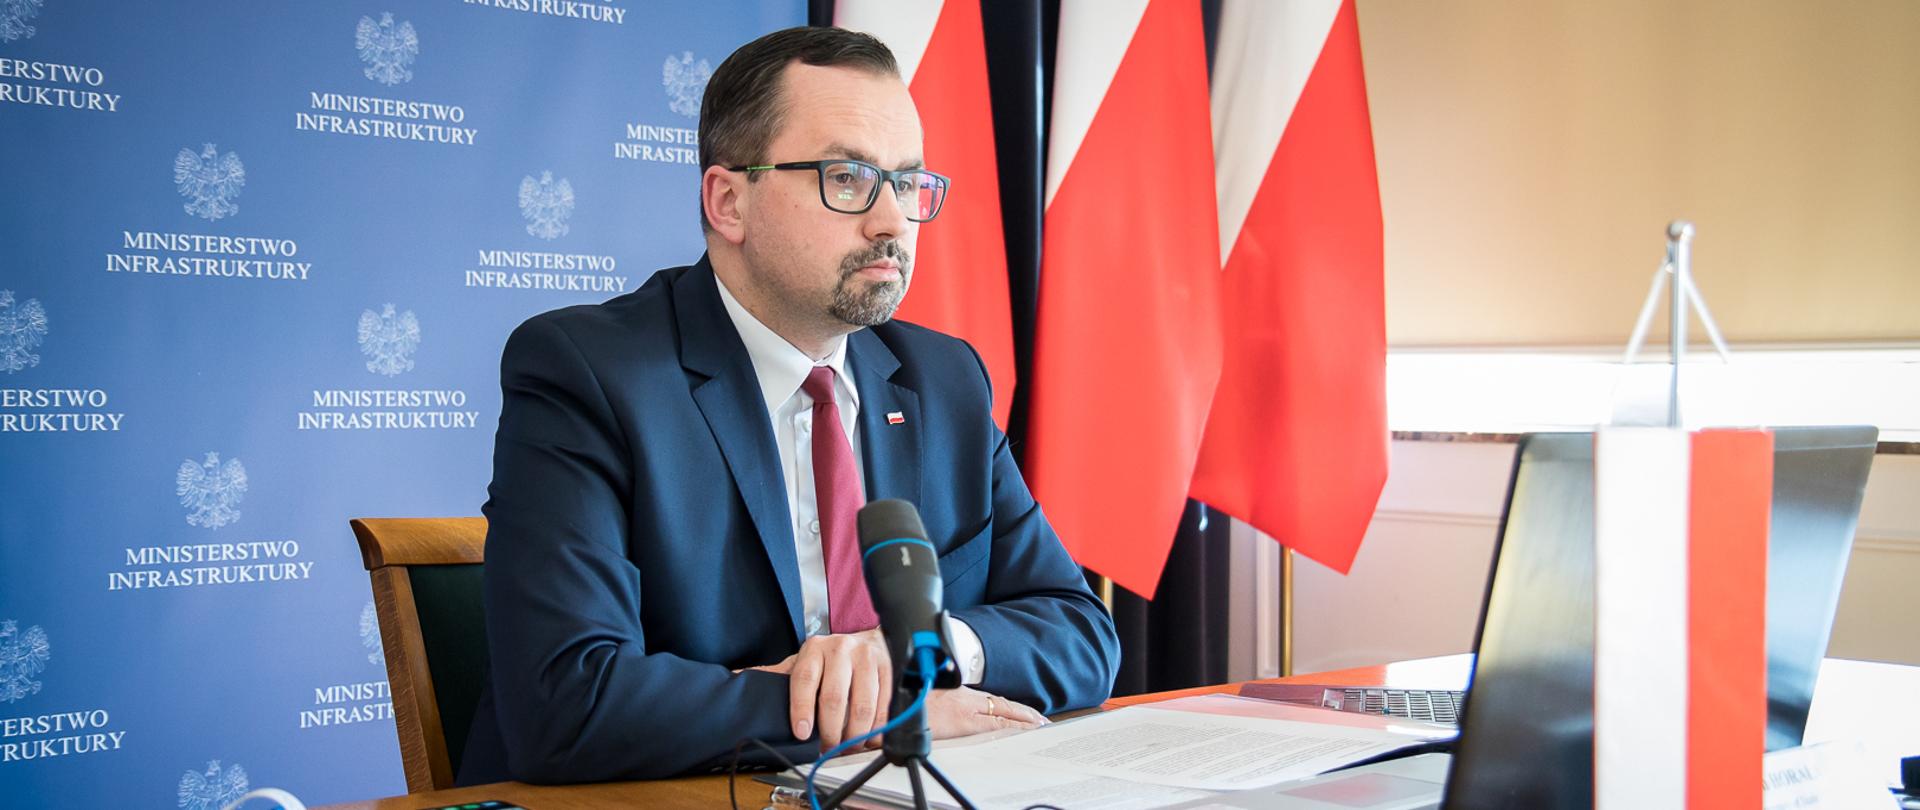  Marcin Horała - wiceminister infrastruktury